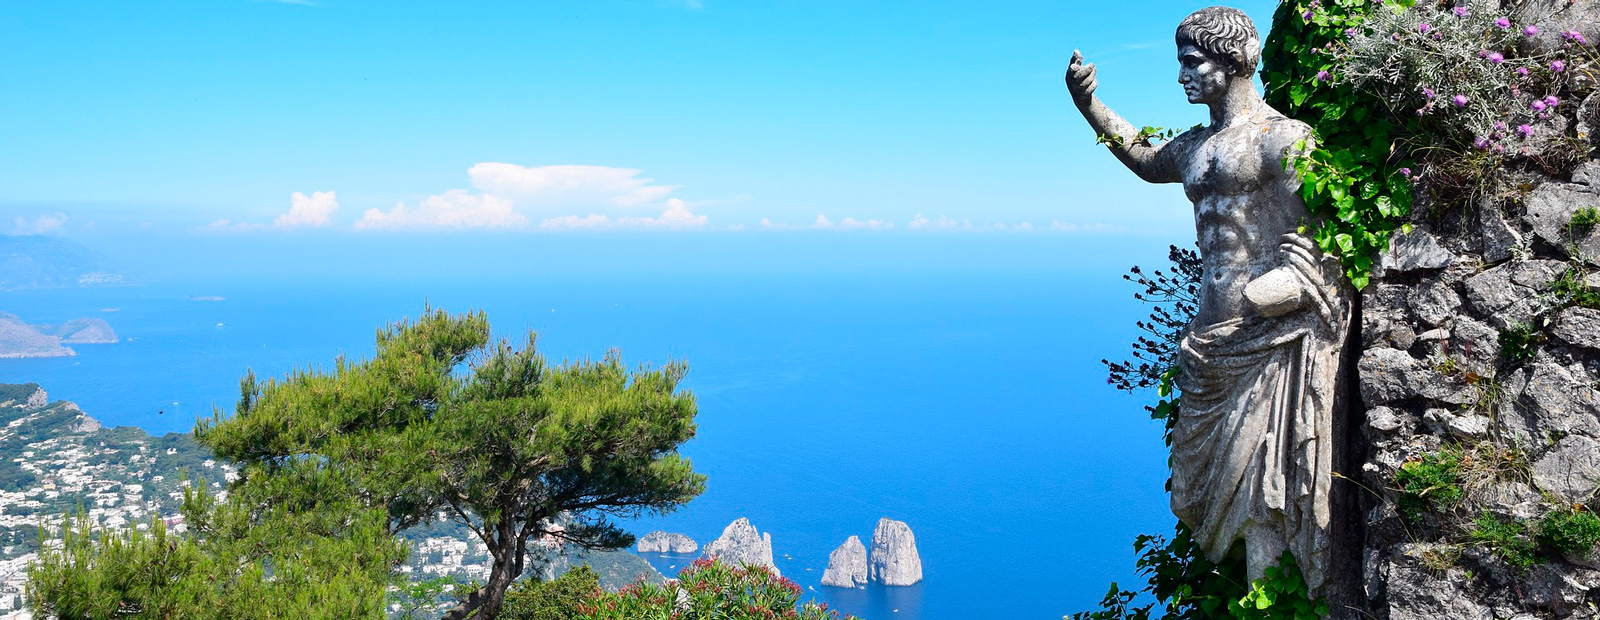 Luxurious holiday homes on Capri island